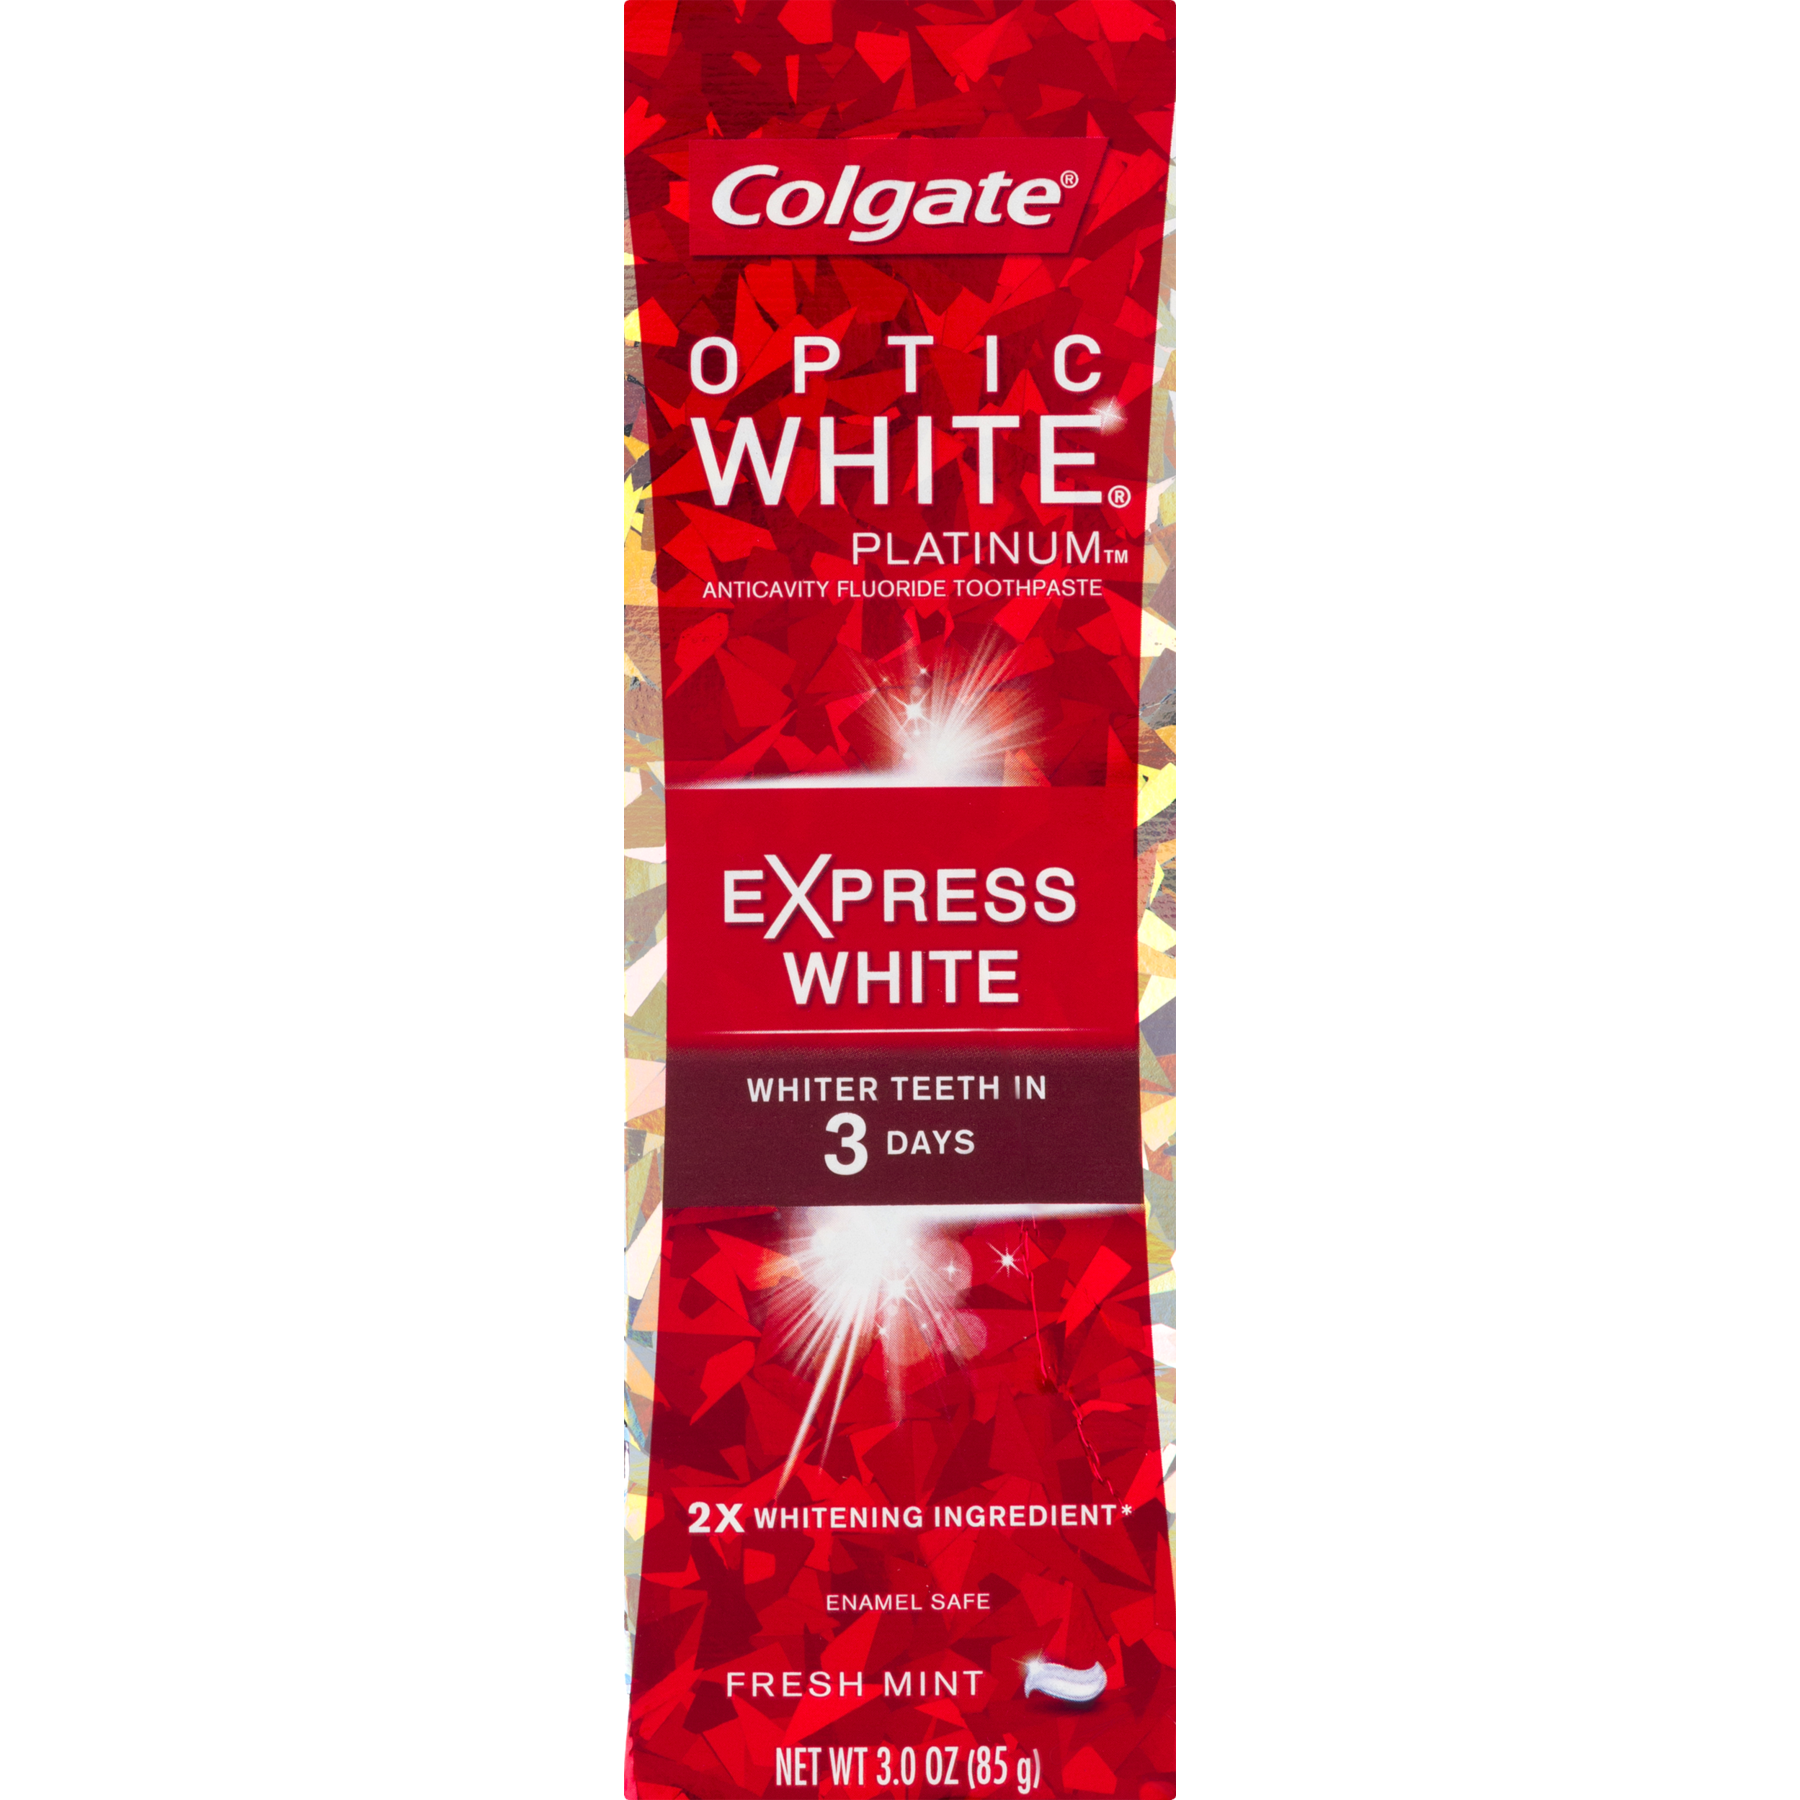 Colgate Optic White Express White Whitening Toothpaste - 3 ounce - image 4 of 8